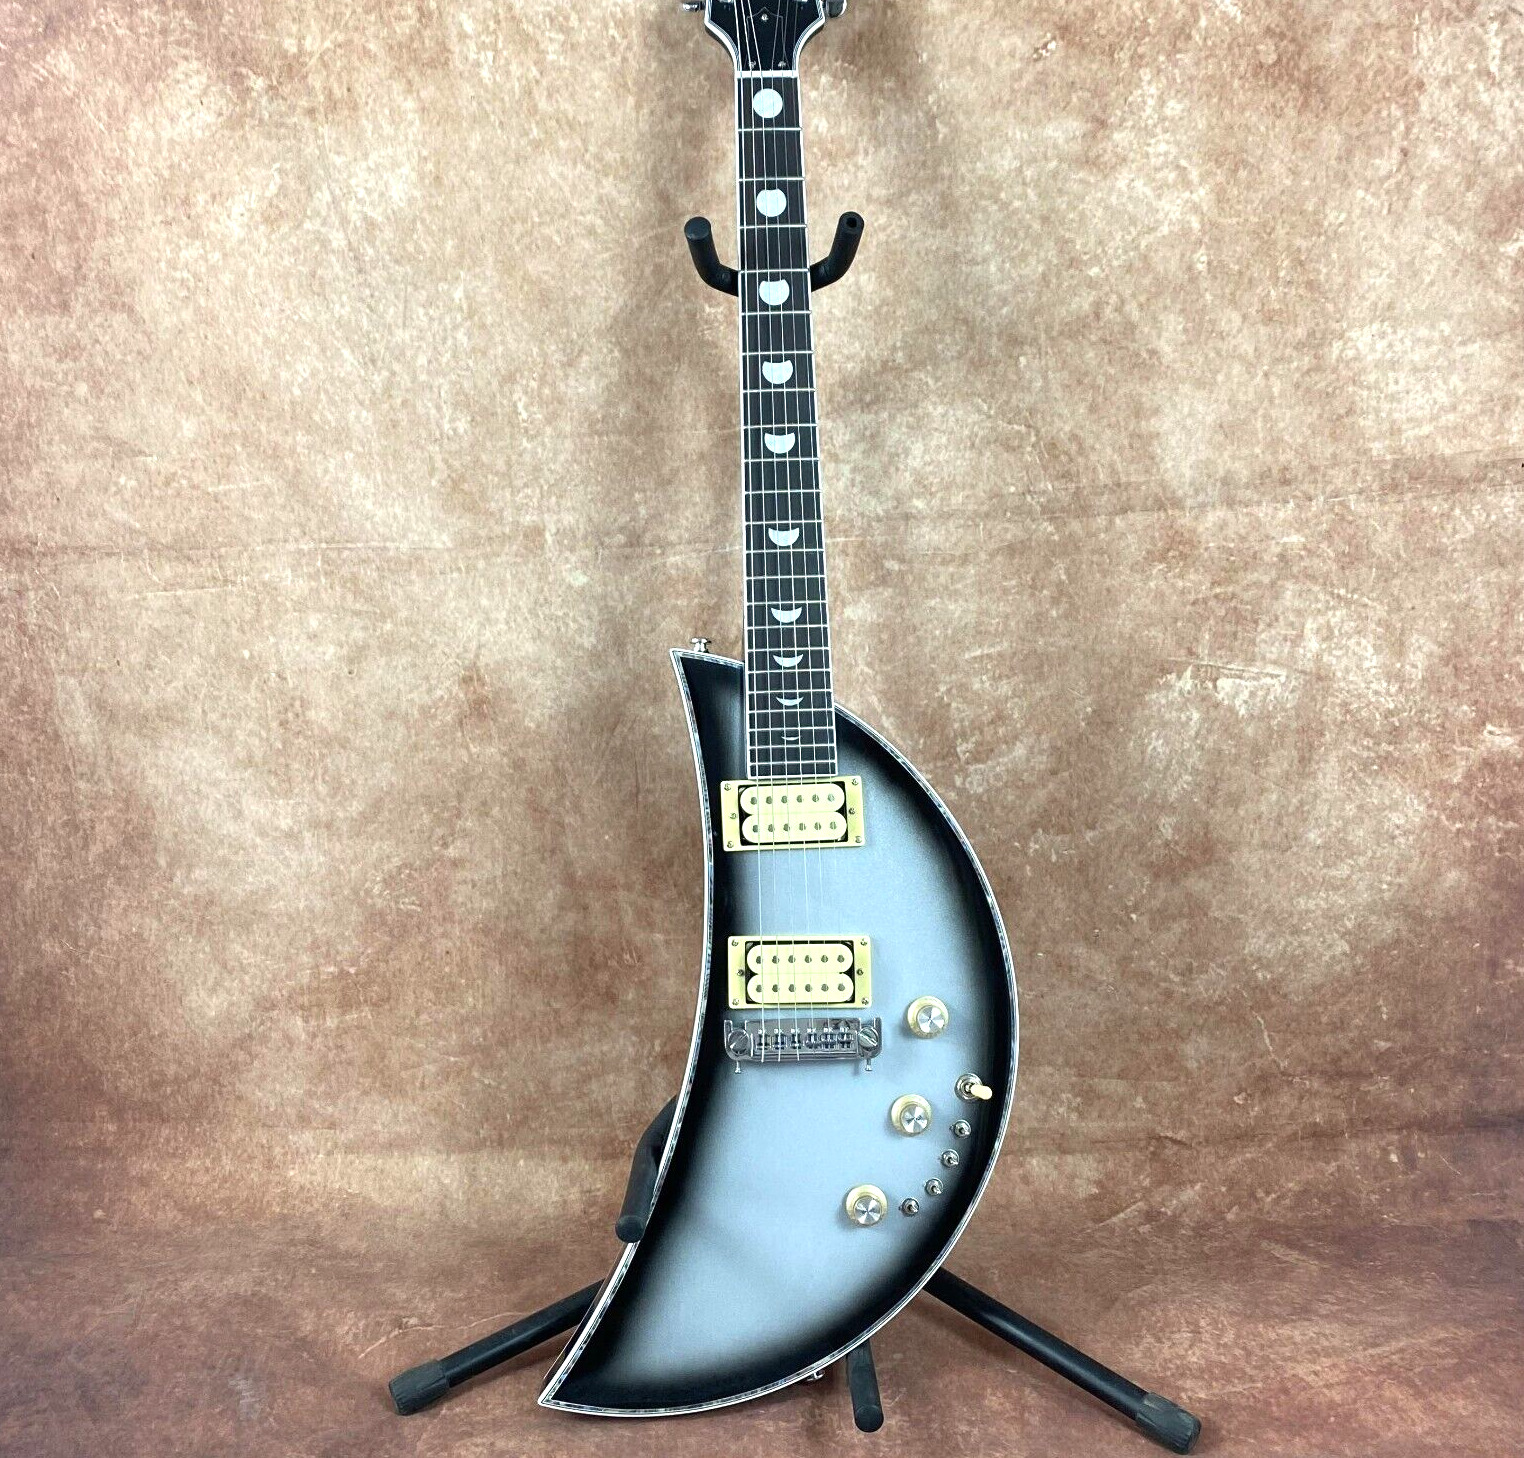 Eastwood Guitars Moonsault  Metallic Blackburst  Vintage Kawai electric guitar